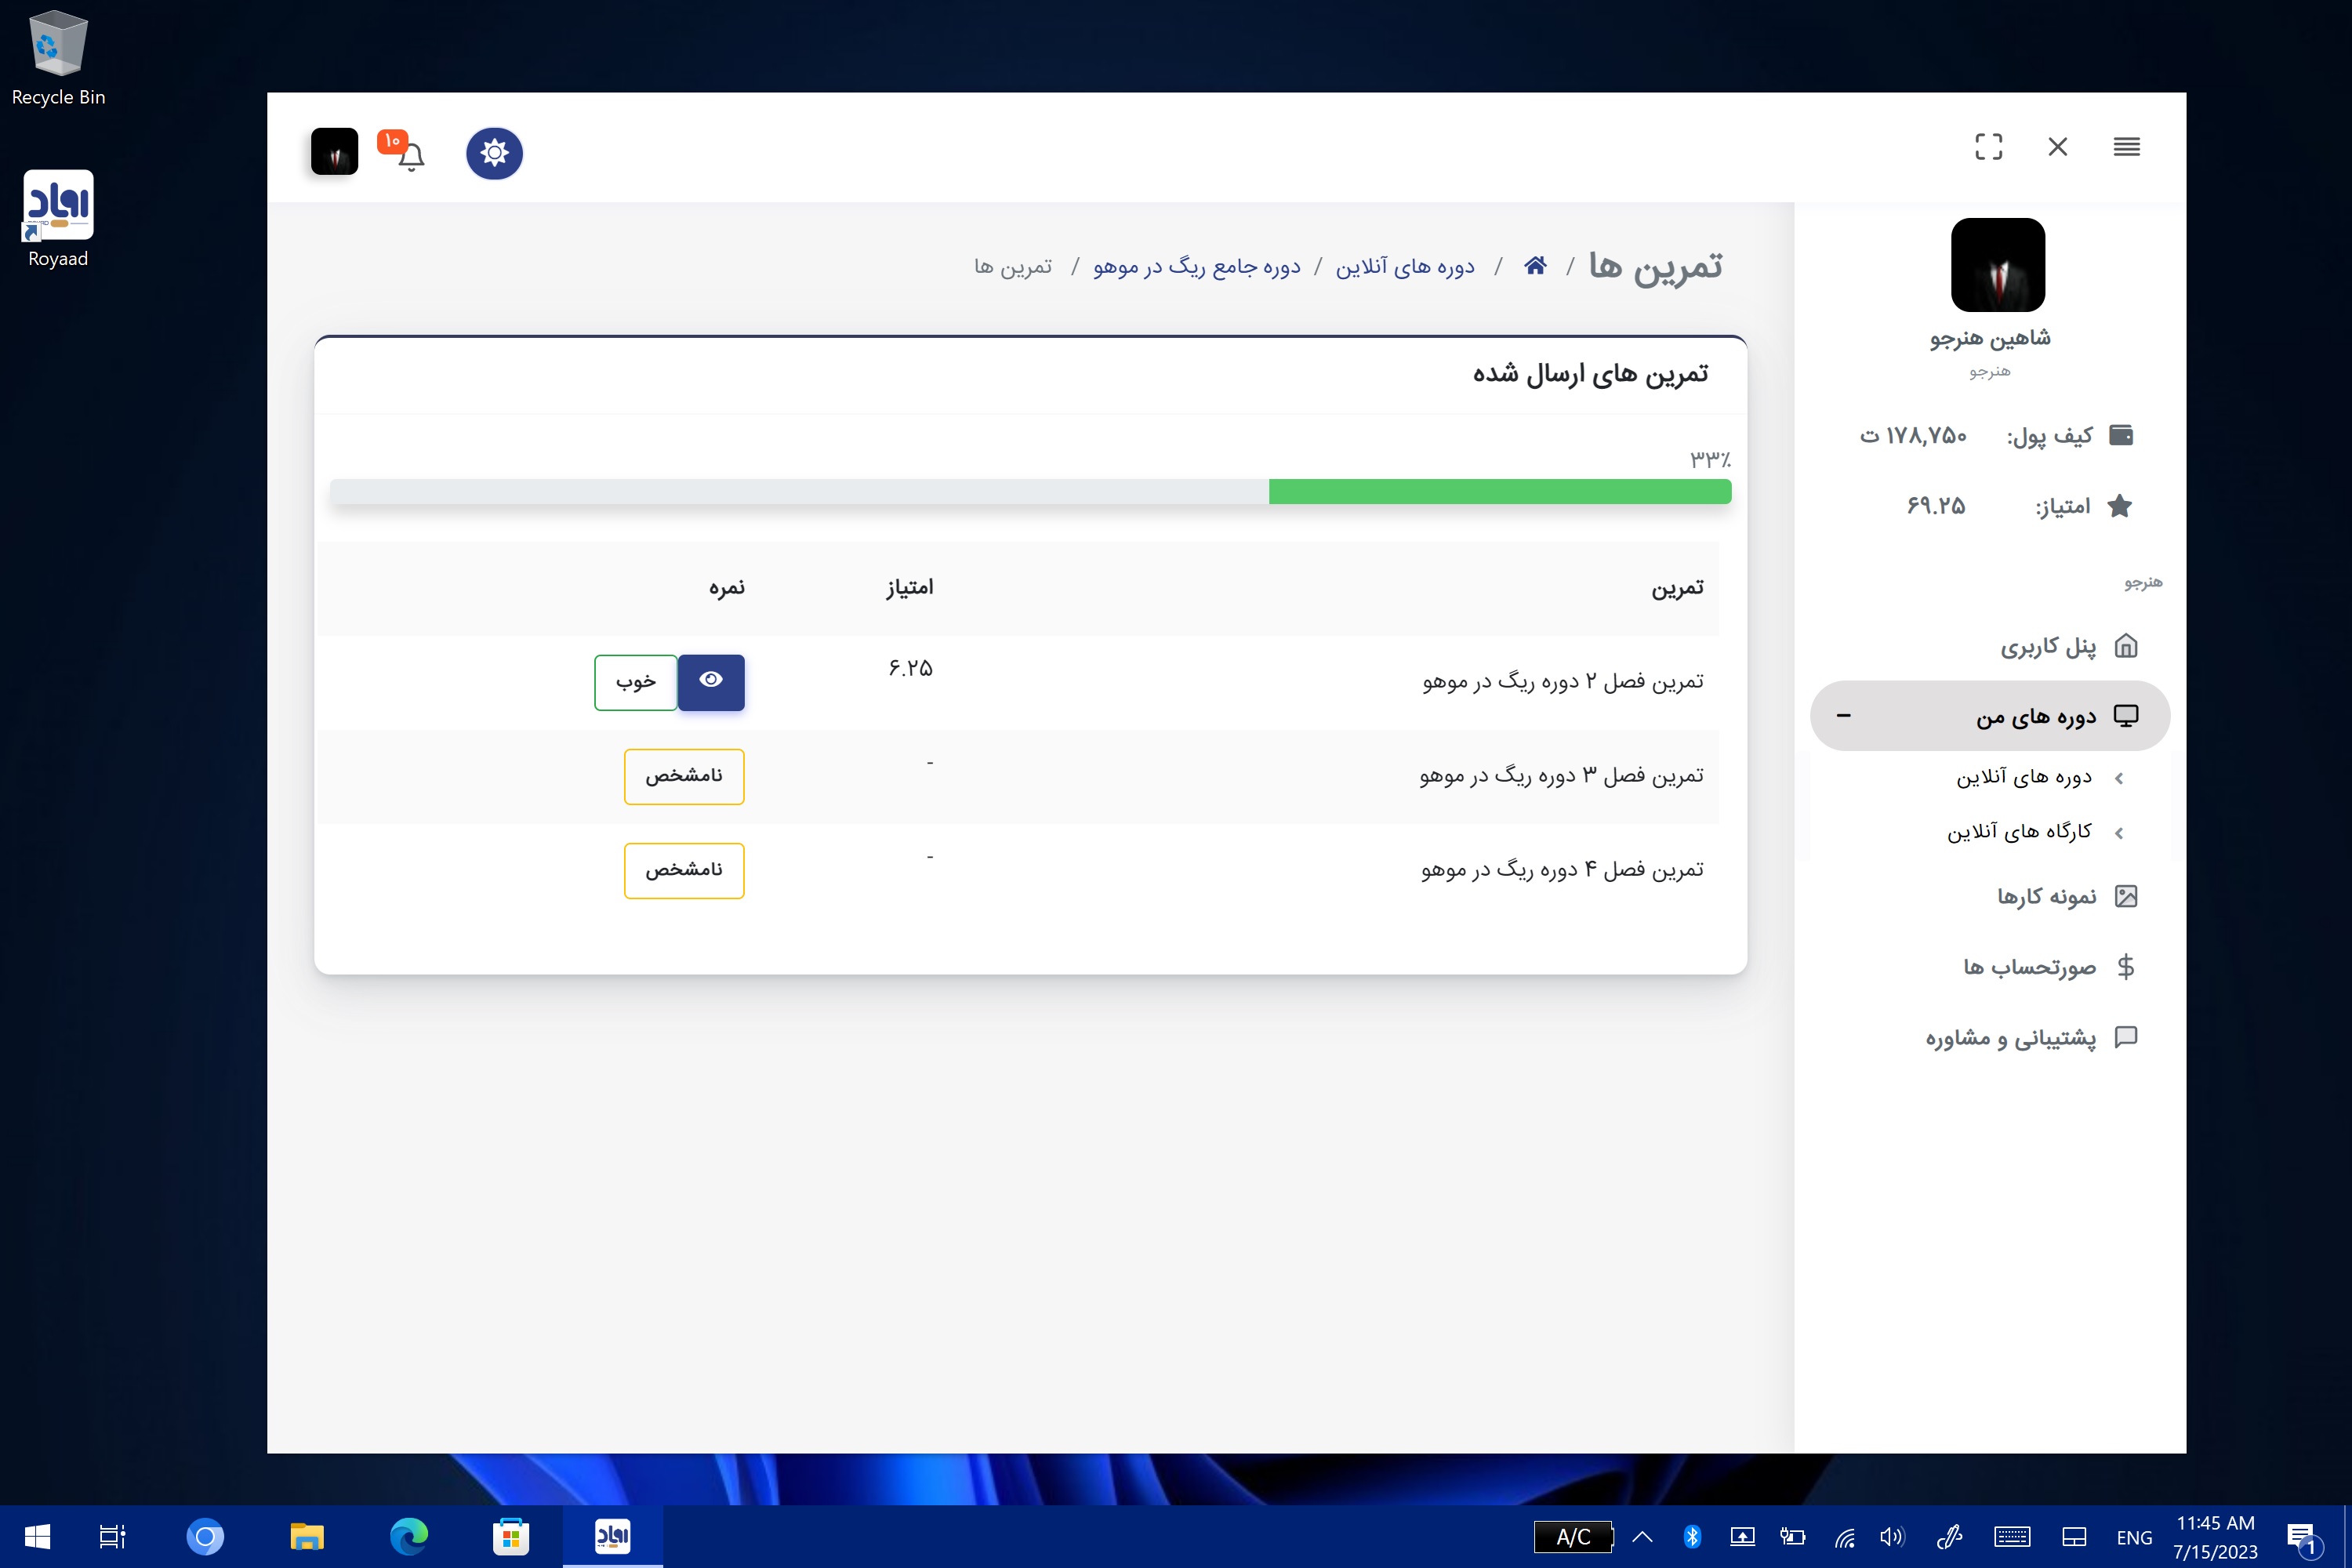 Shahinsoft.ir Royaad desktop application Homeworks